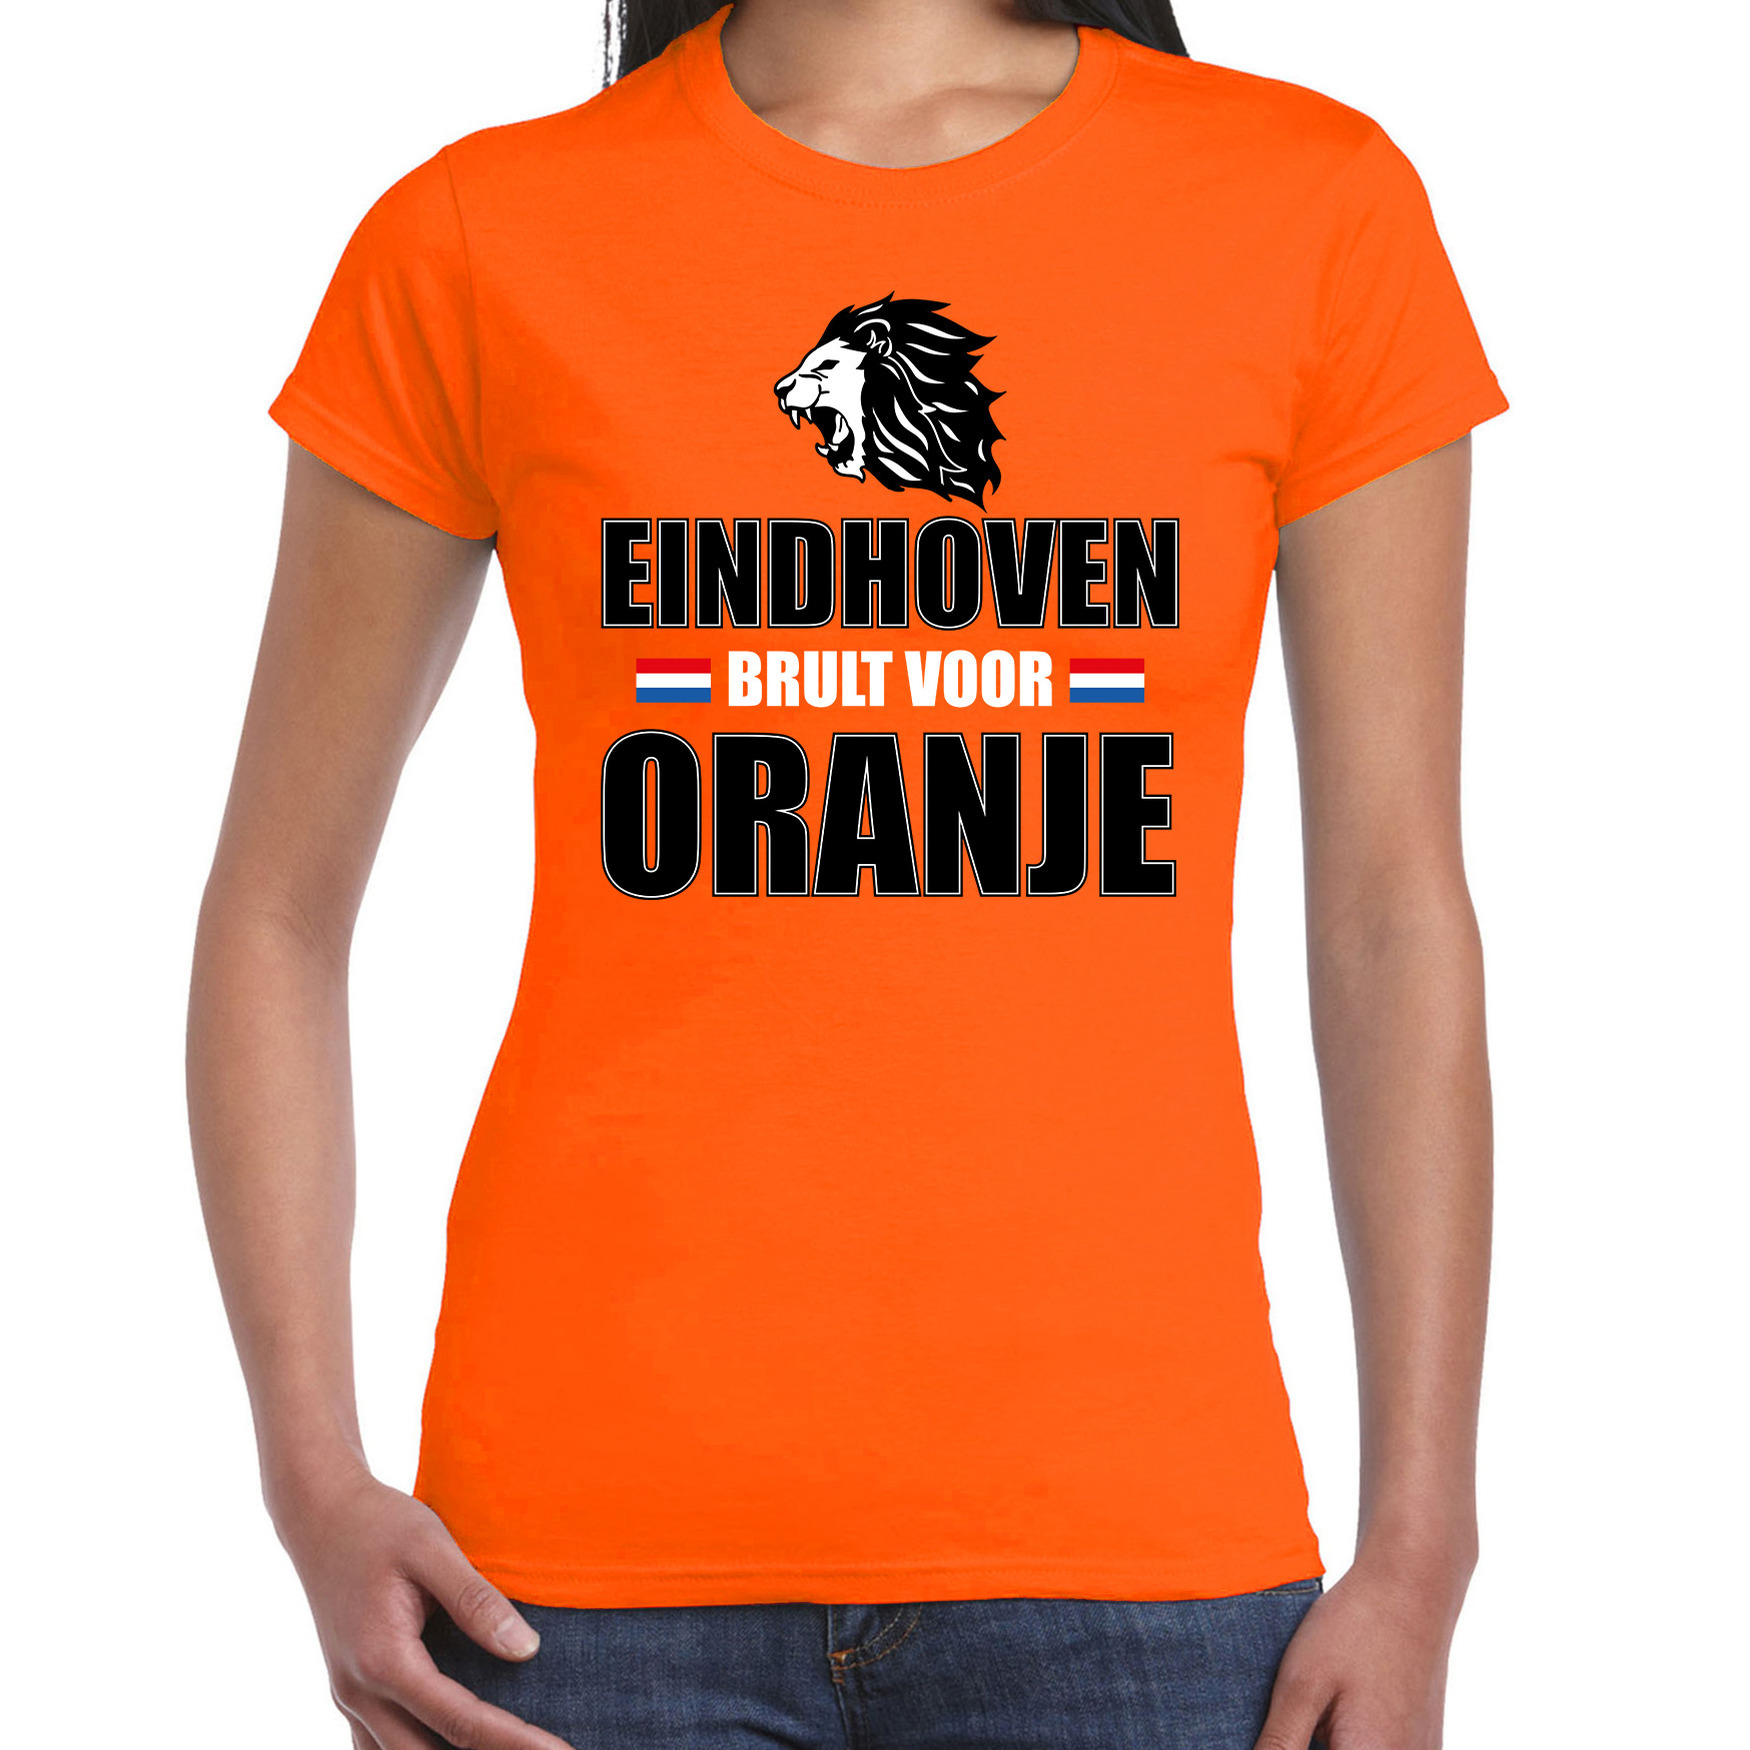 Oranje EK- WK fan shirt-kleding Eindhoven brult voor oranje voor dames